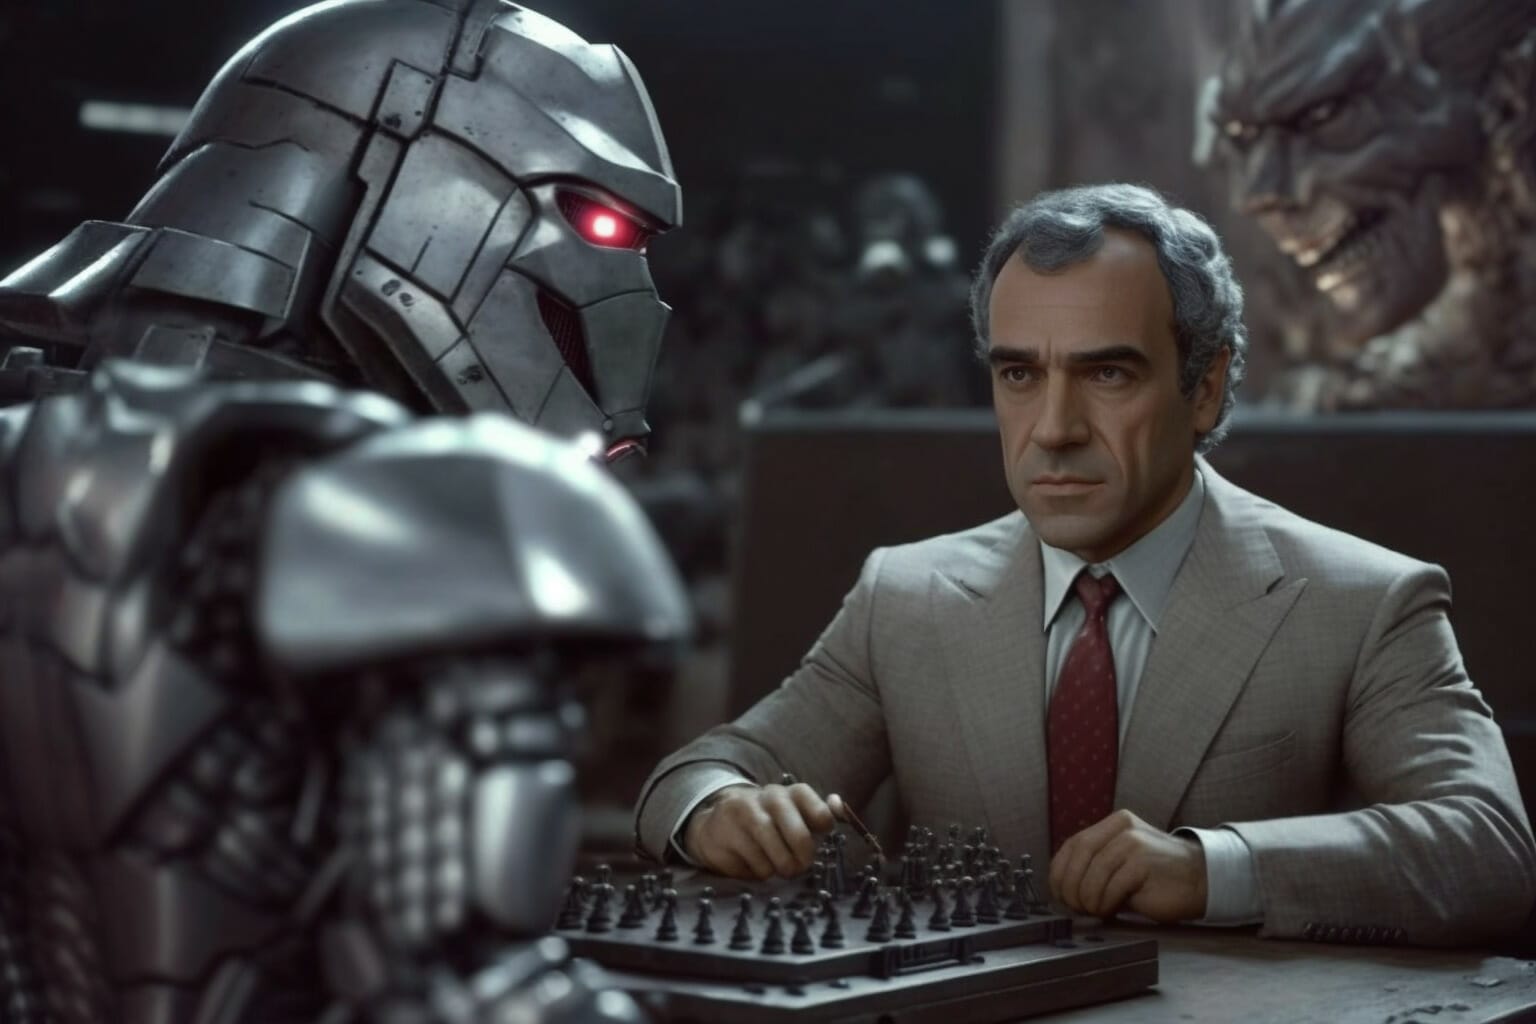 When did Garry Kasparov retire from chess? - Quora